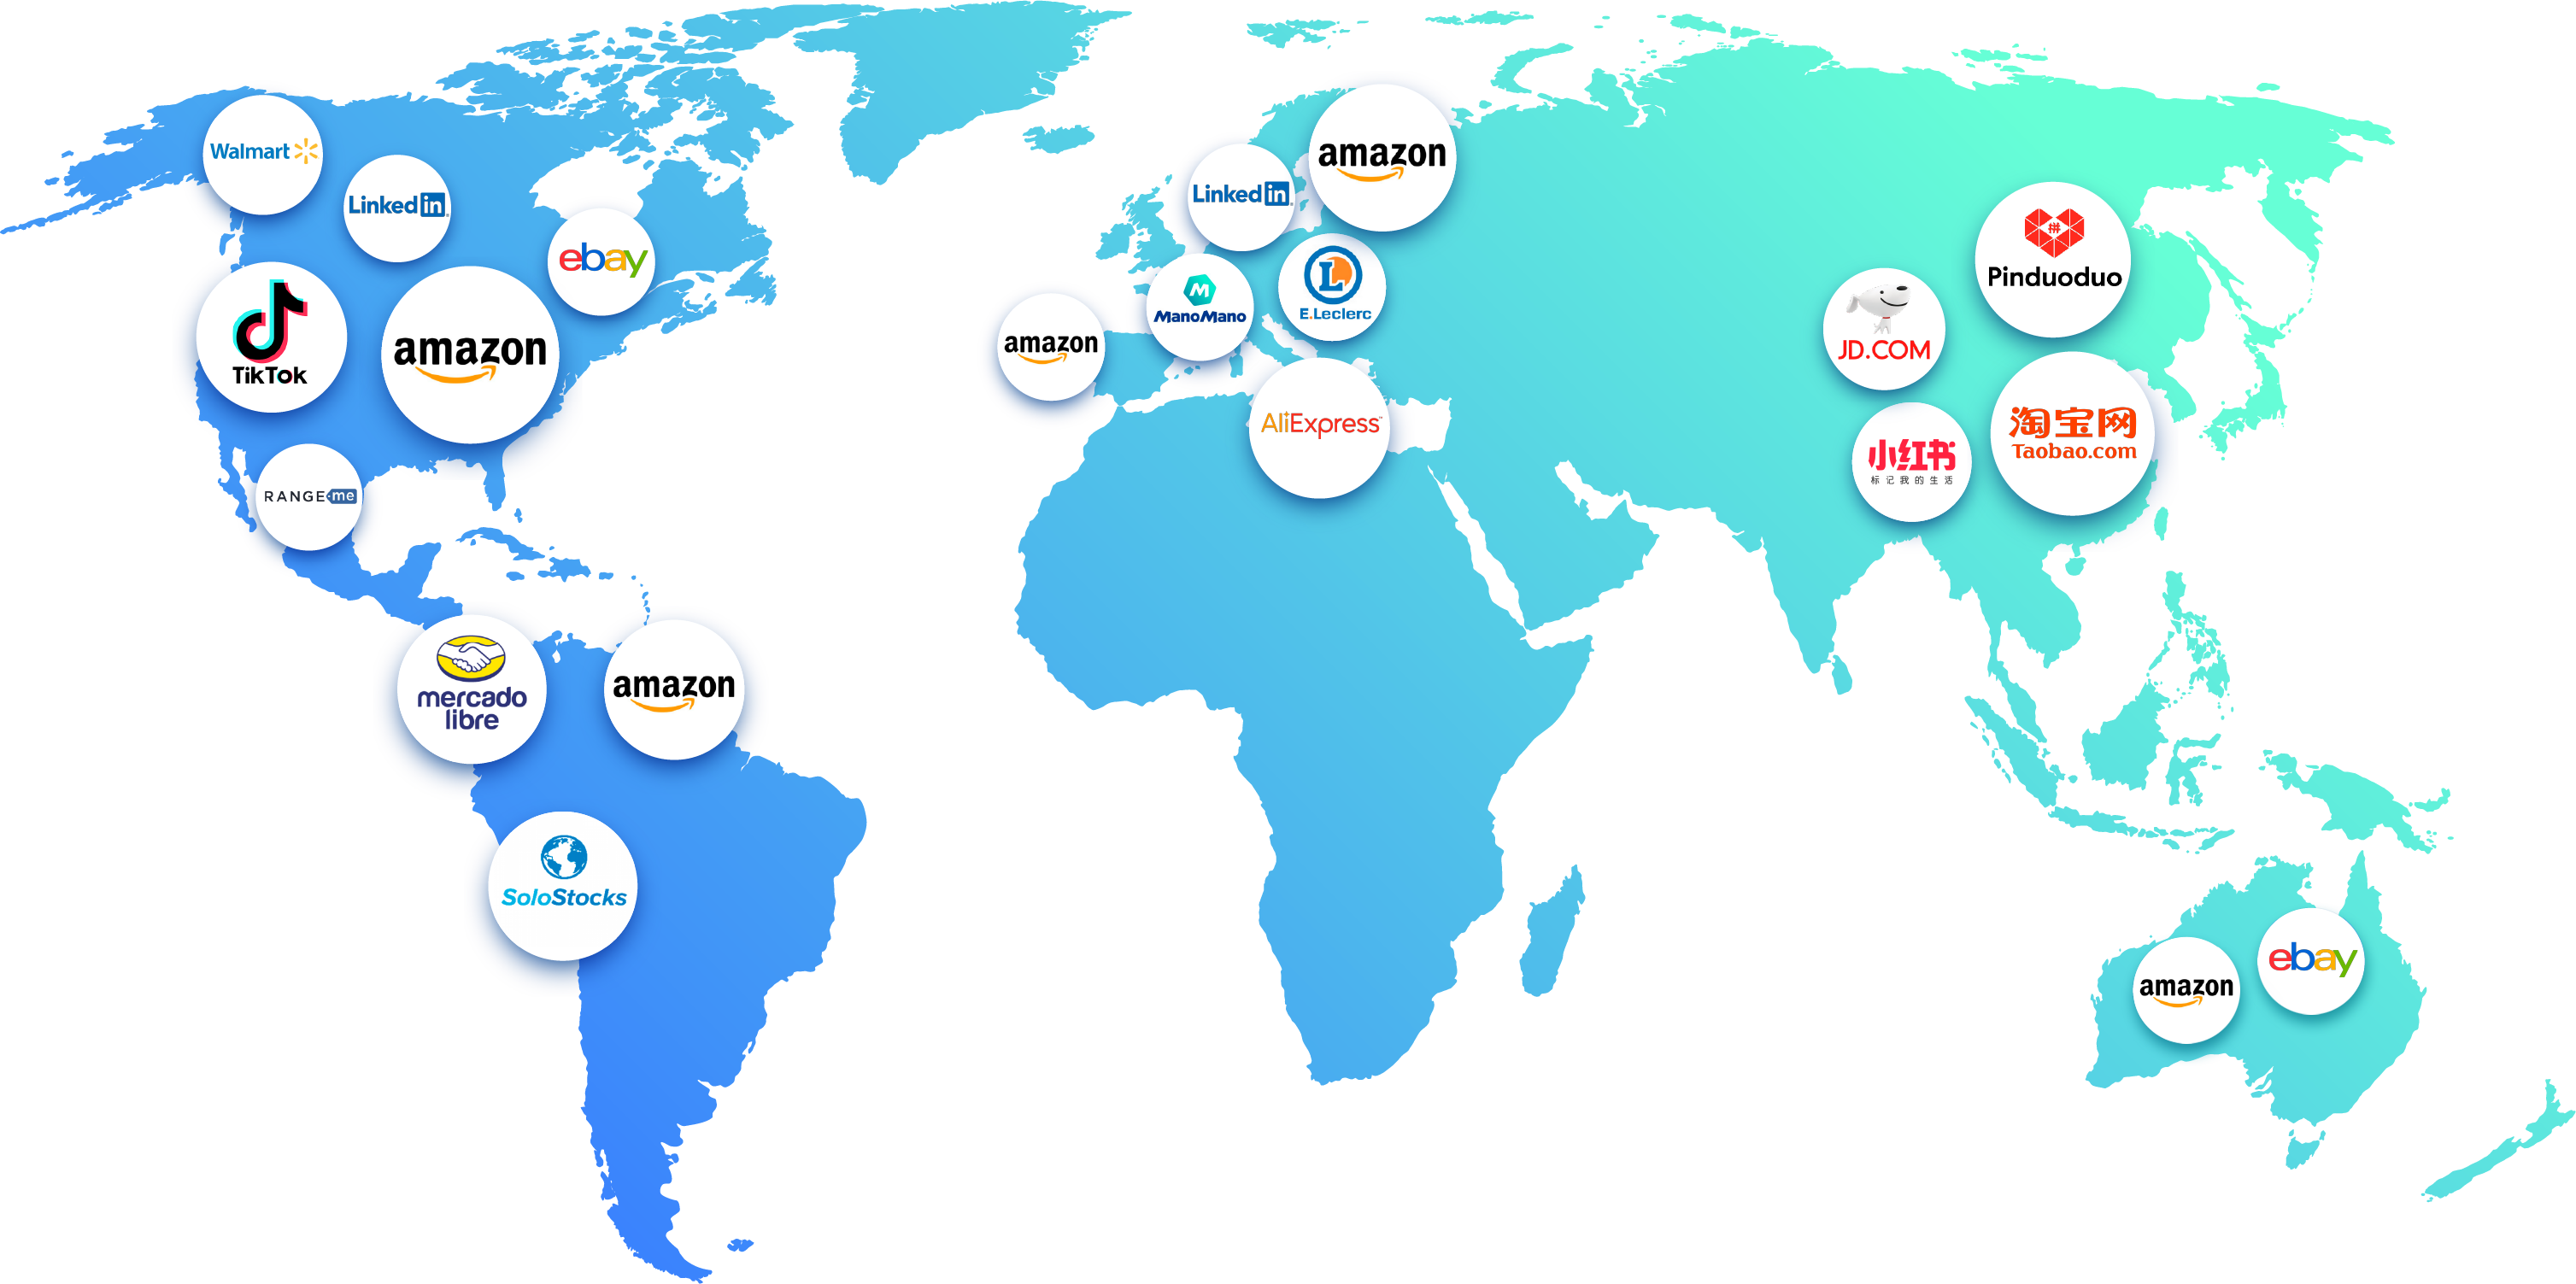 mapa nefty marketing digital internacional marketplaces